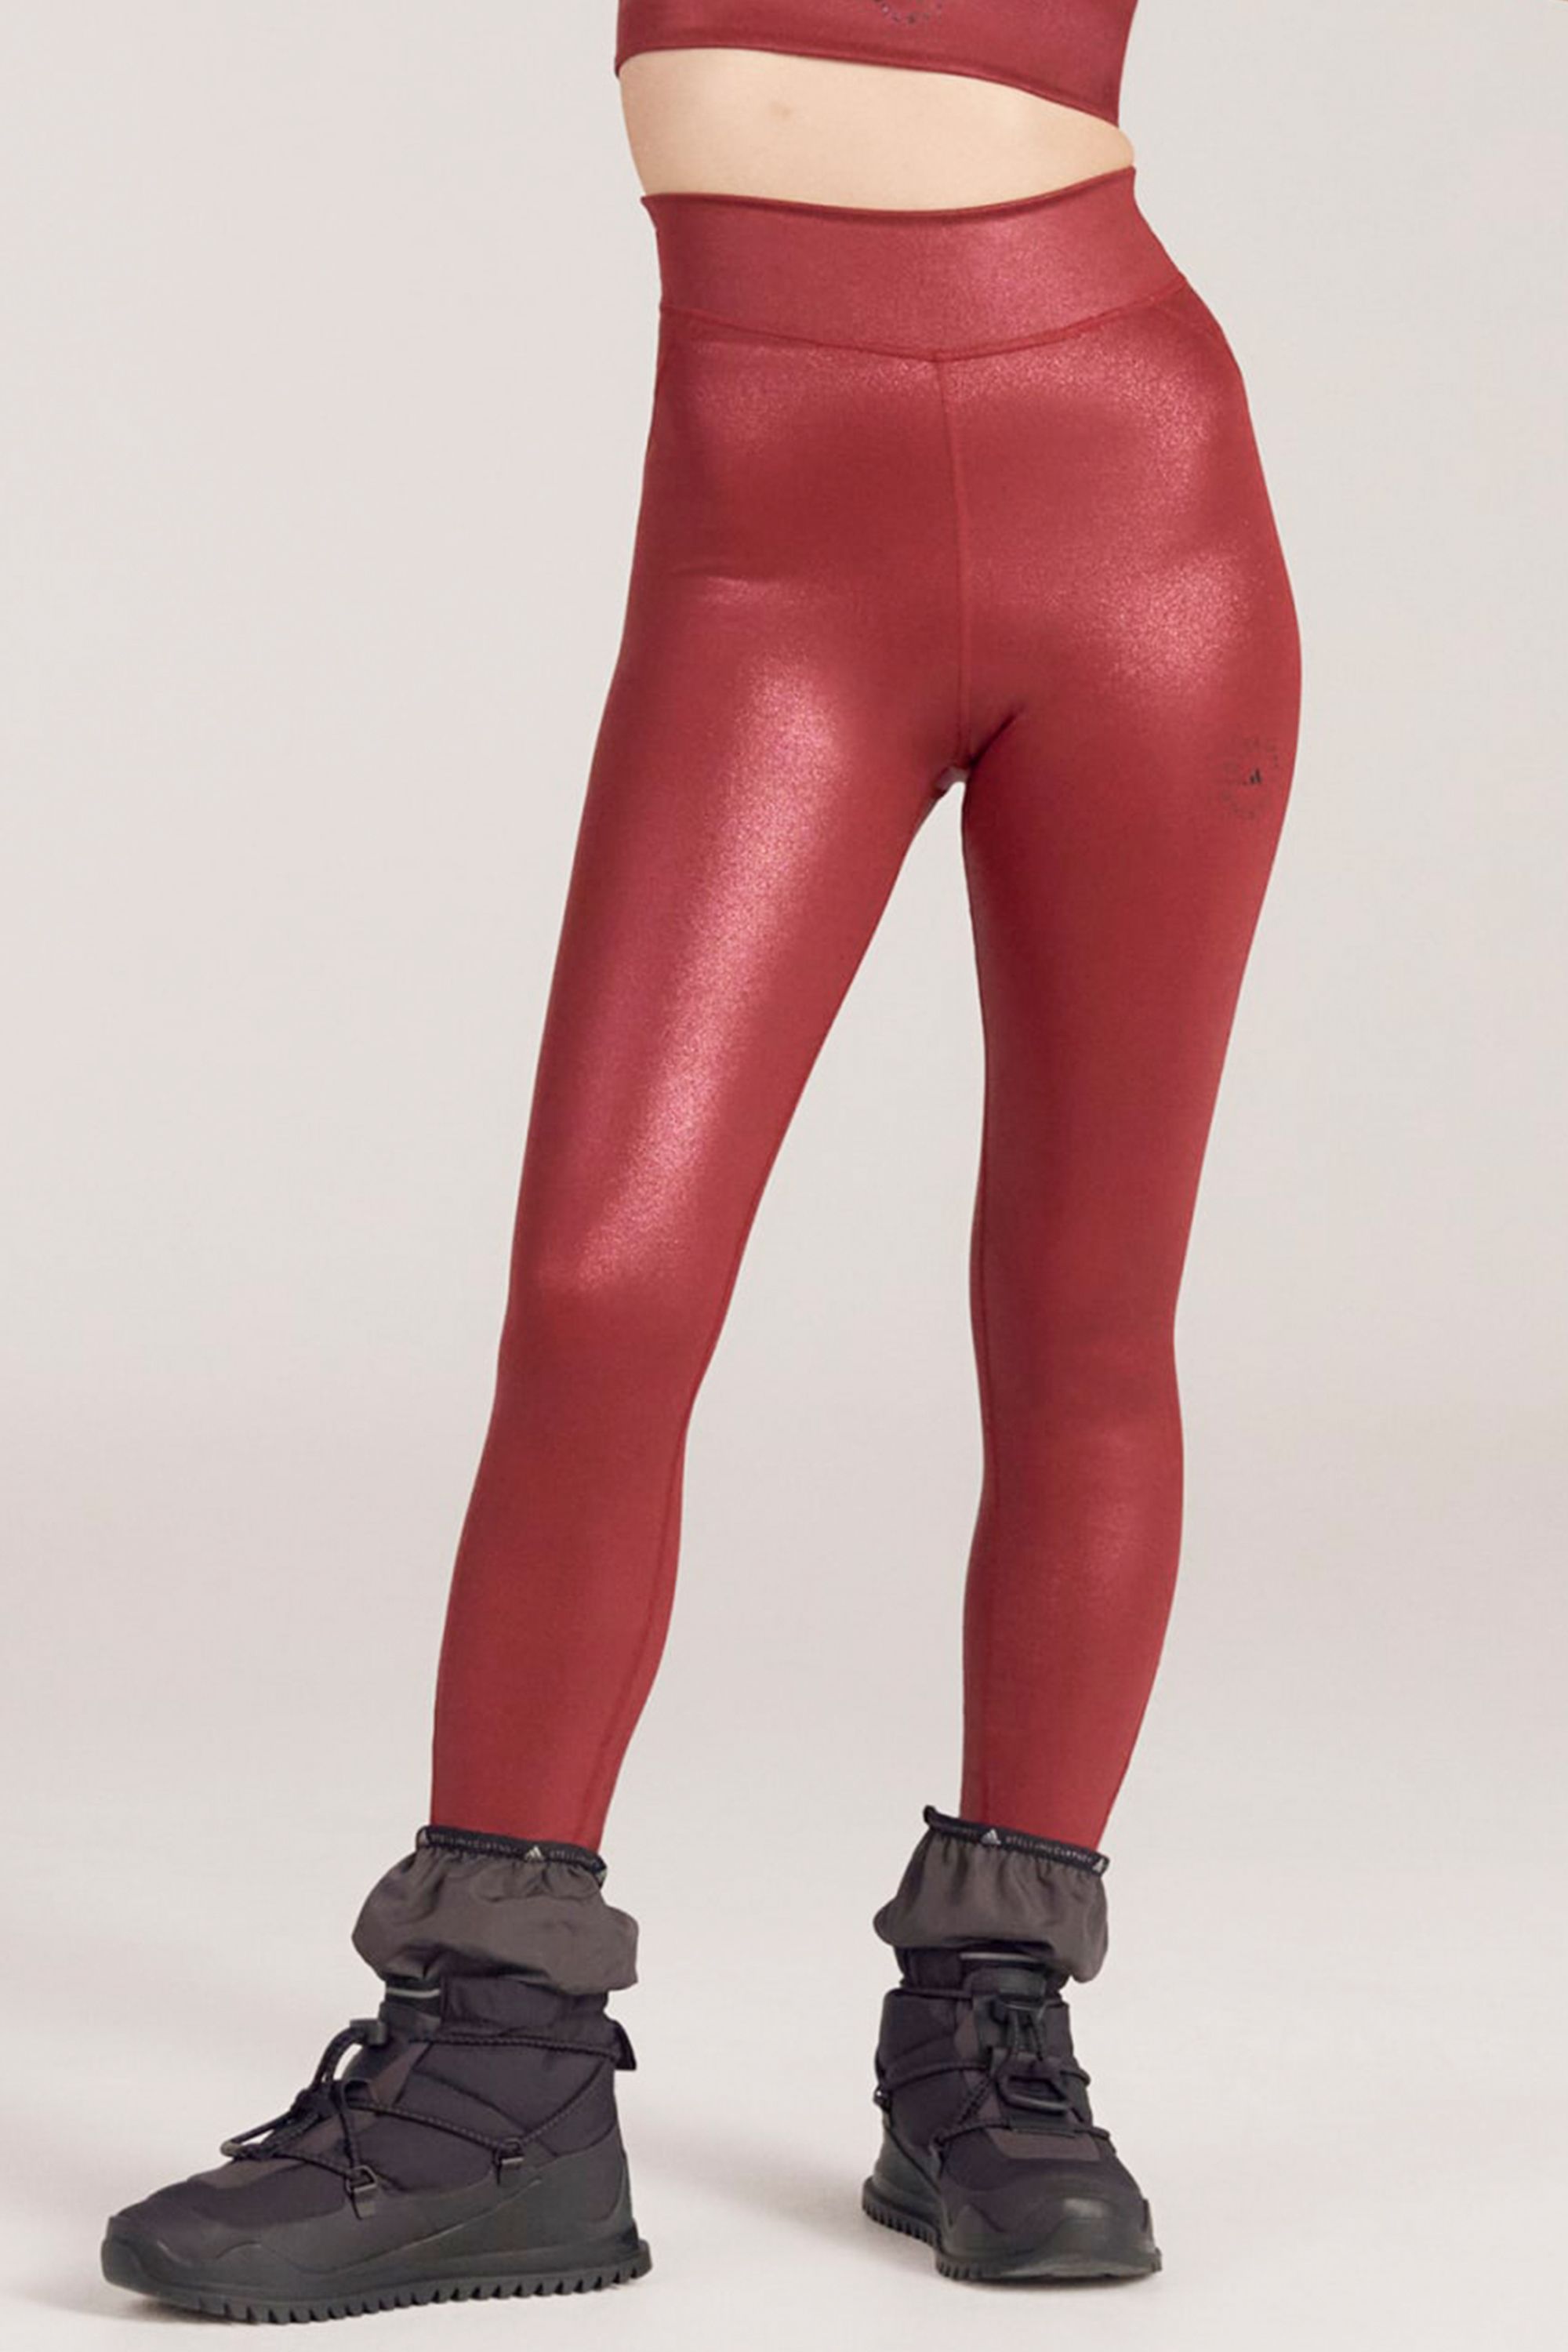 Cozy Dynamic High-Waisted Leggings | Compression fabric, Workout leggings,  High rise leggings